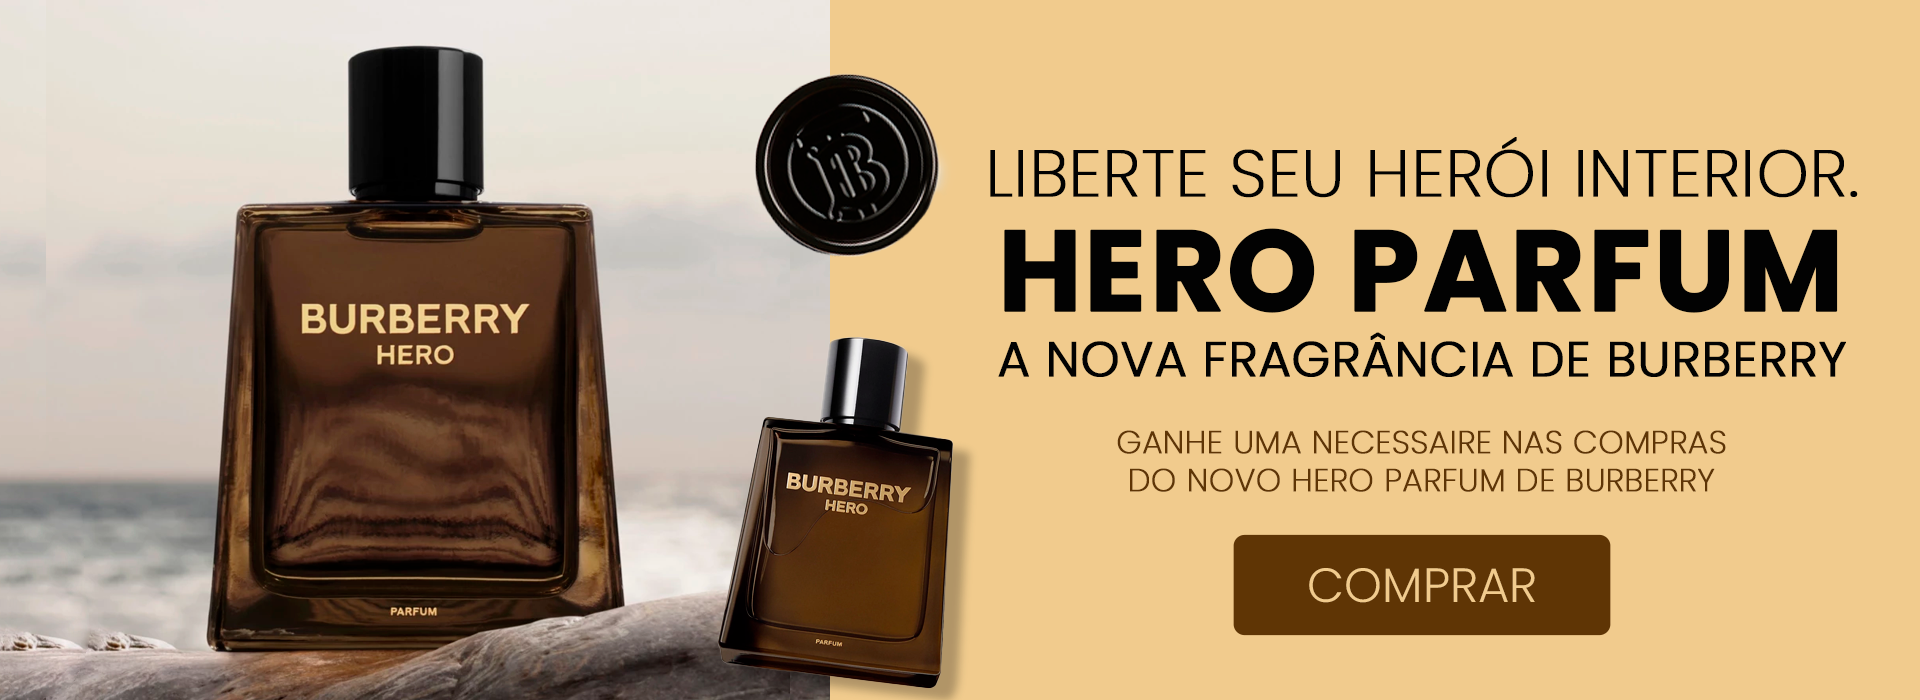 Burberry hero parfum